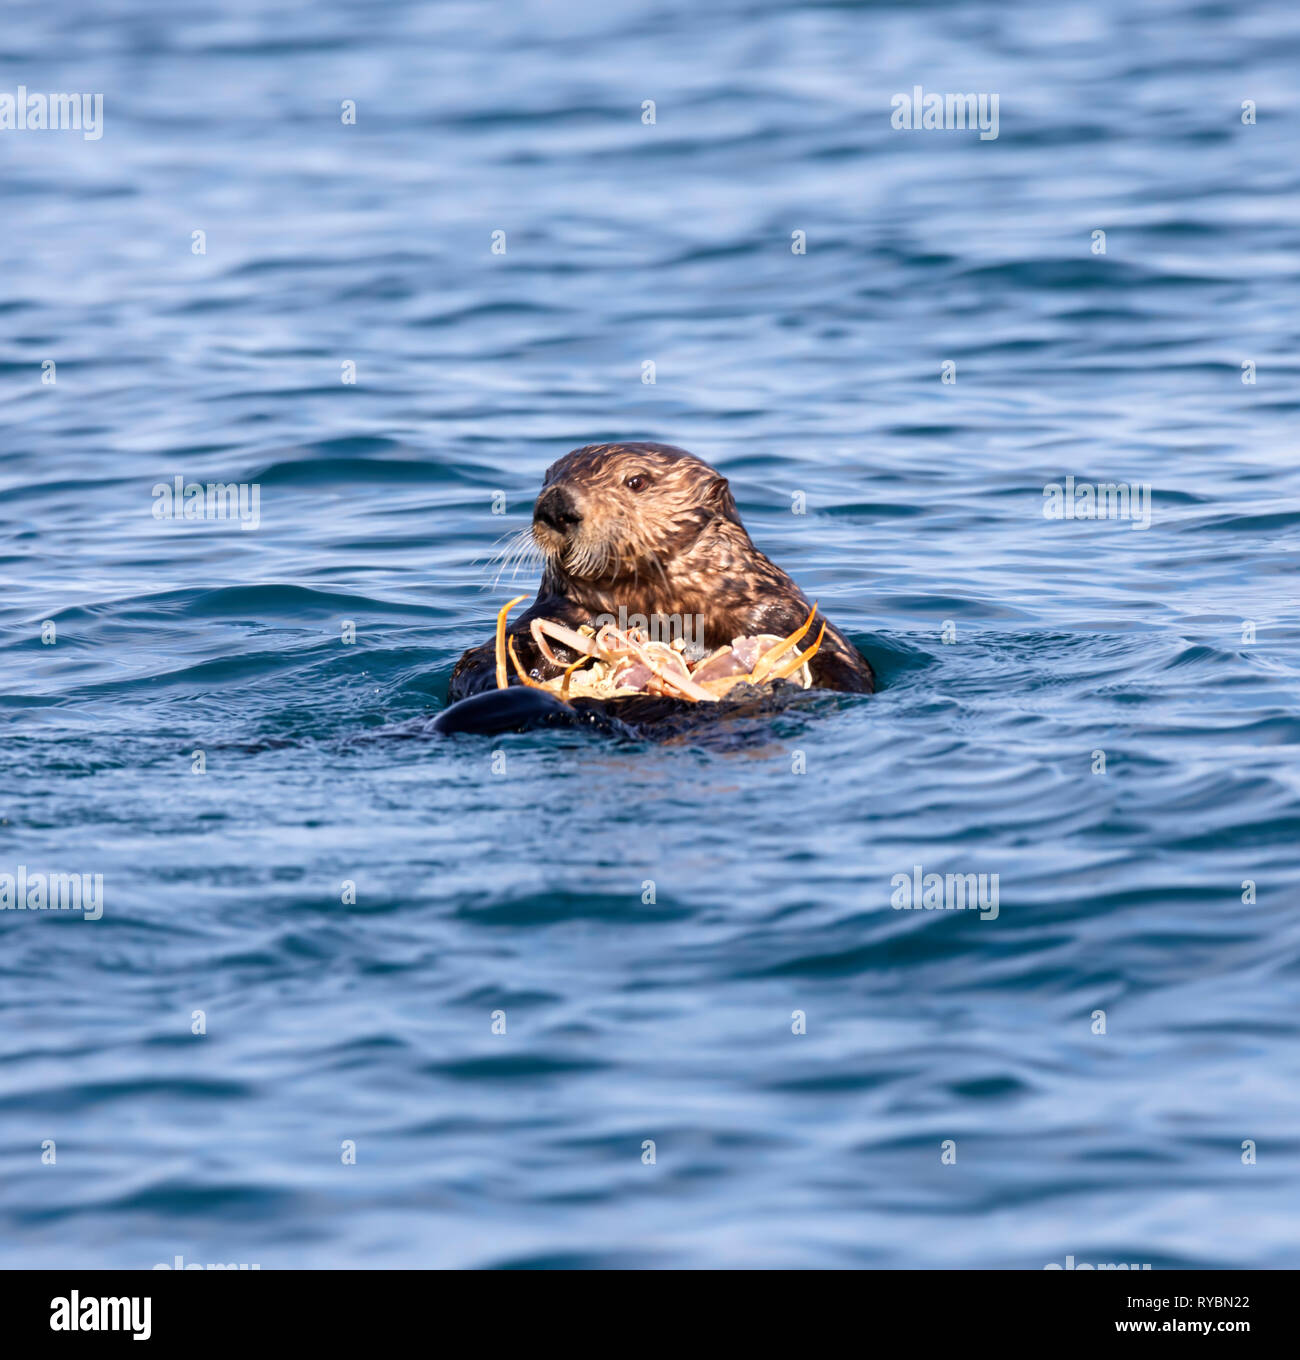 Sea otter, Enhydra lutris Stock Photo